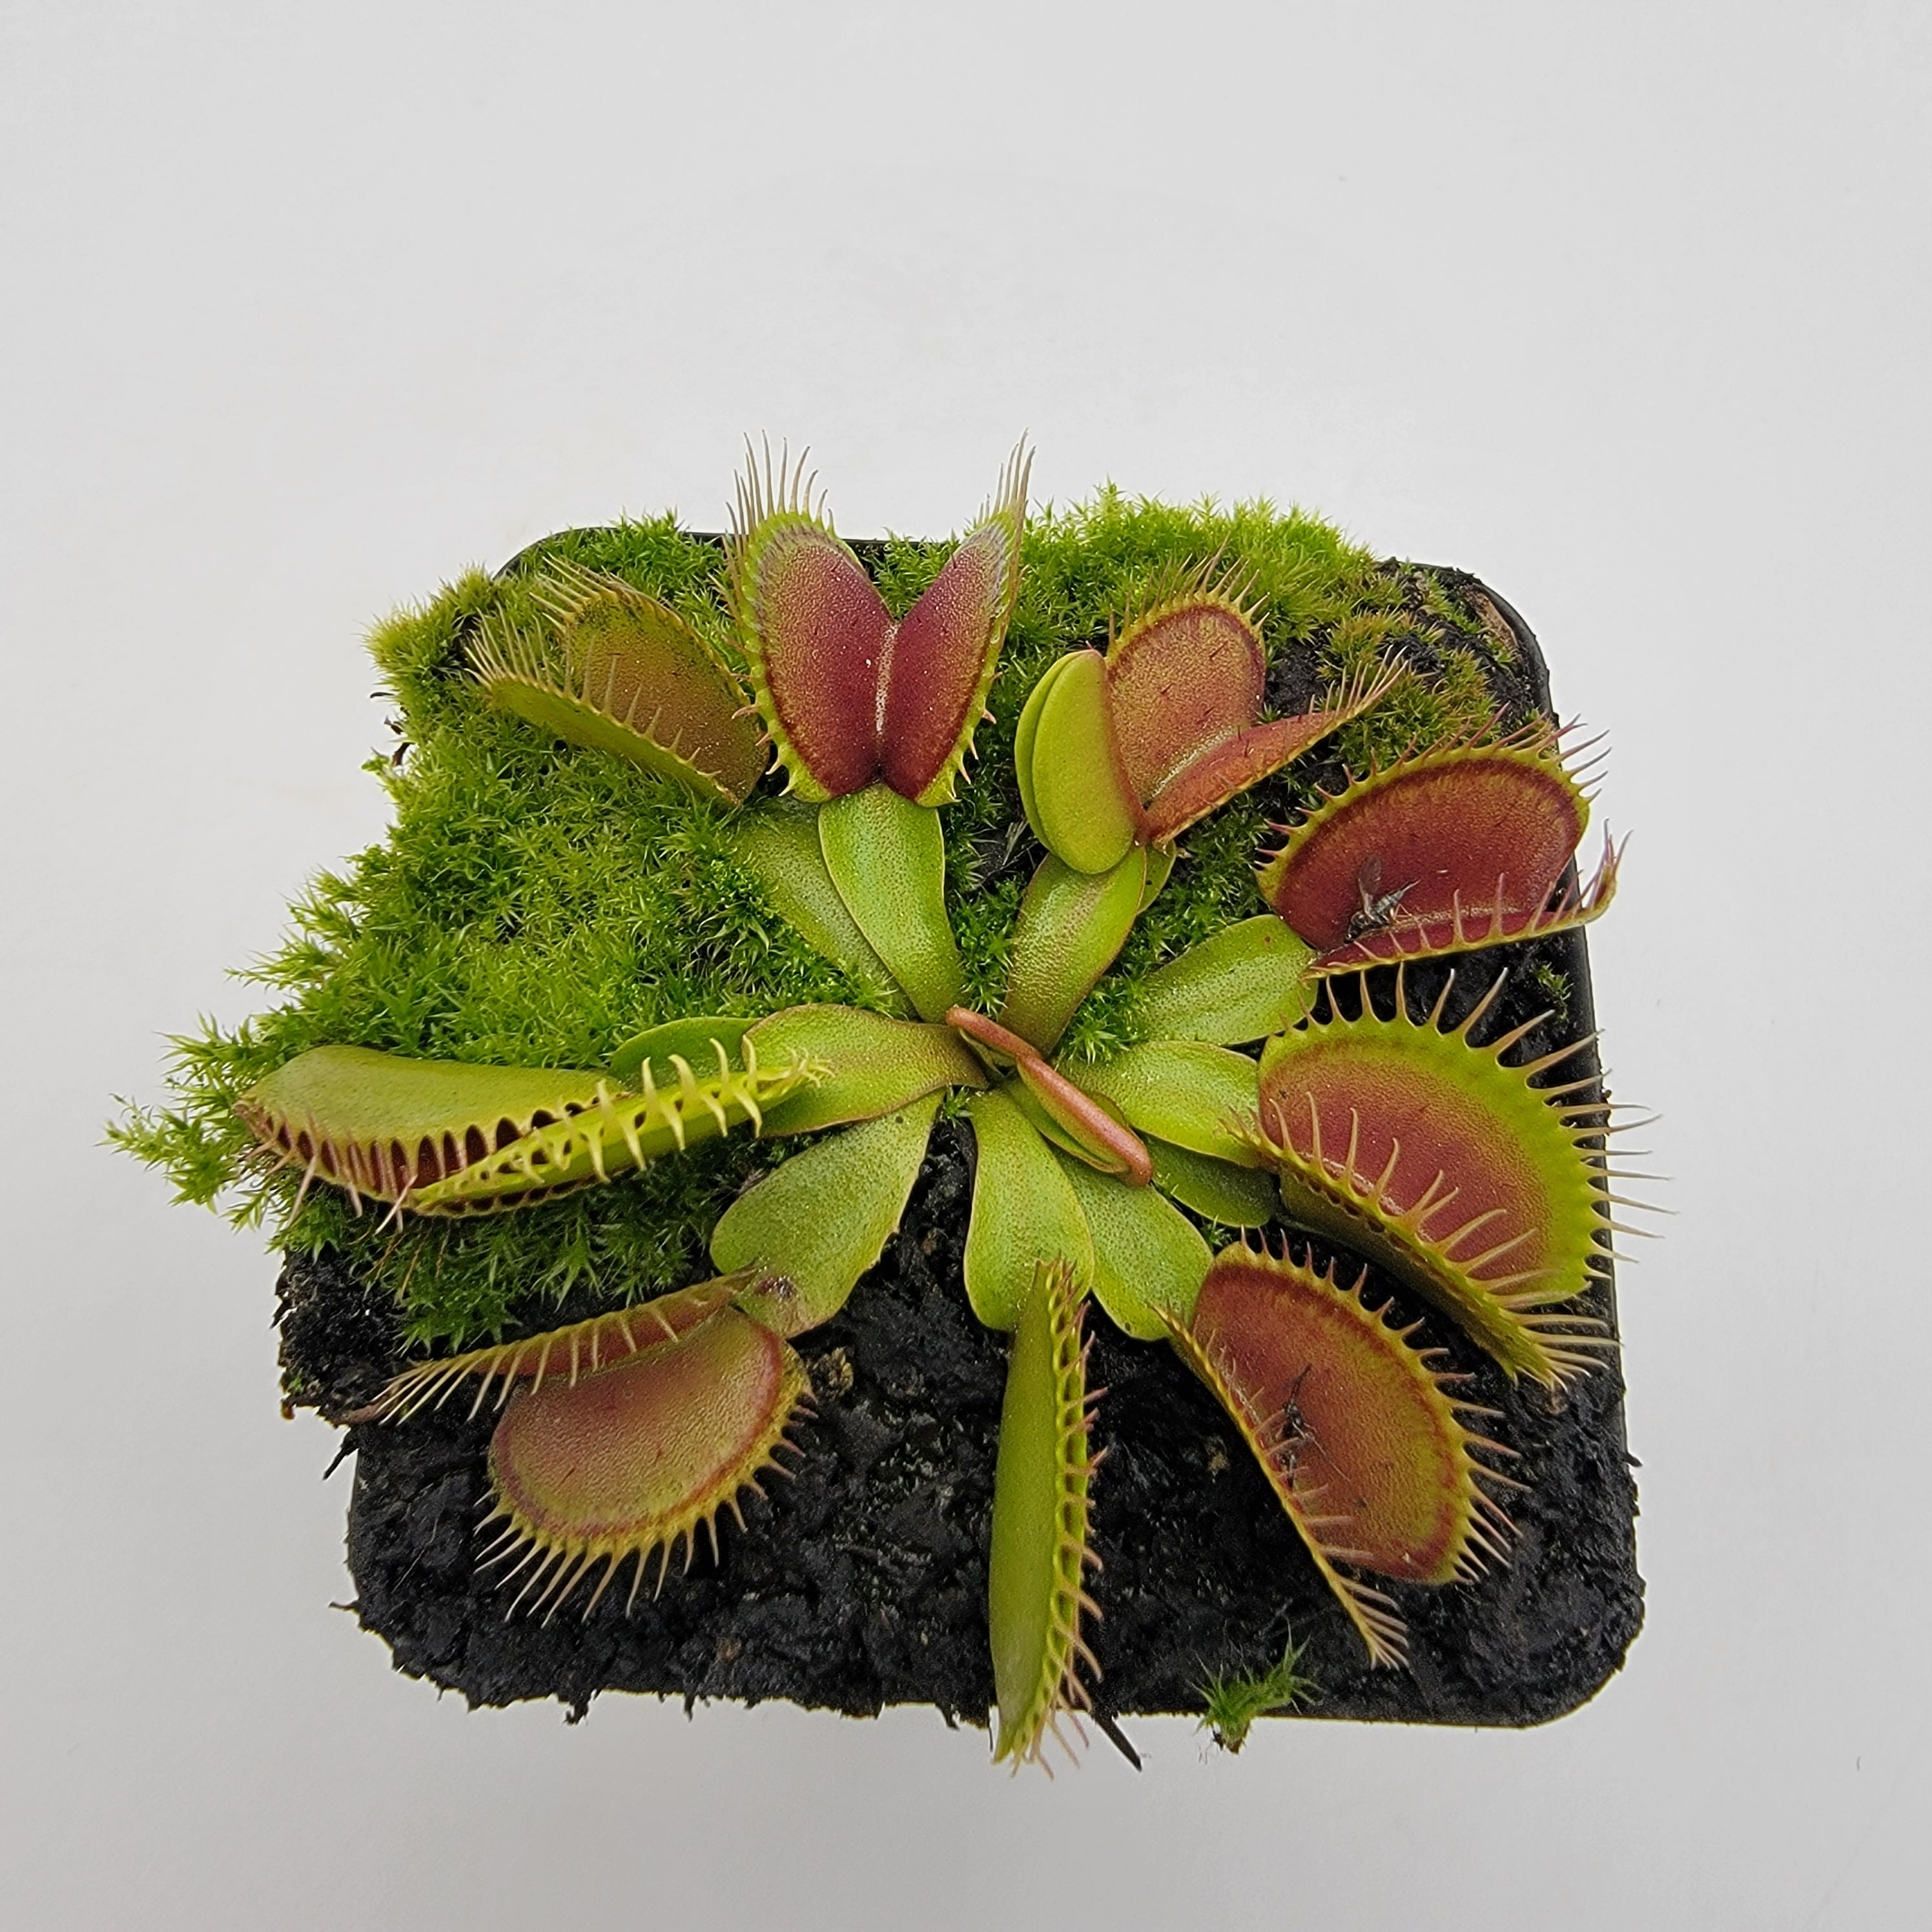 Venus flytrap (Dionaea muscipula) 'Southwest Giant' - Rainbow Carnivorous Plants LLC